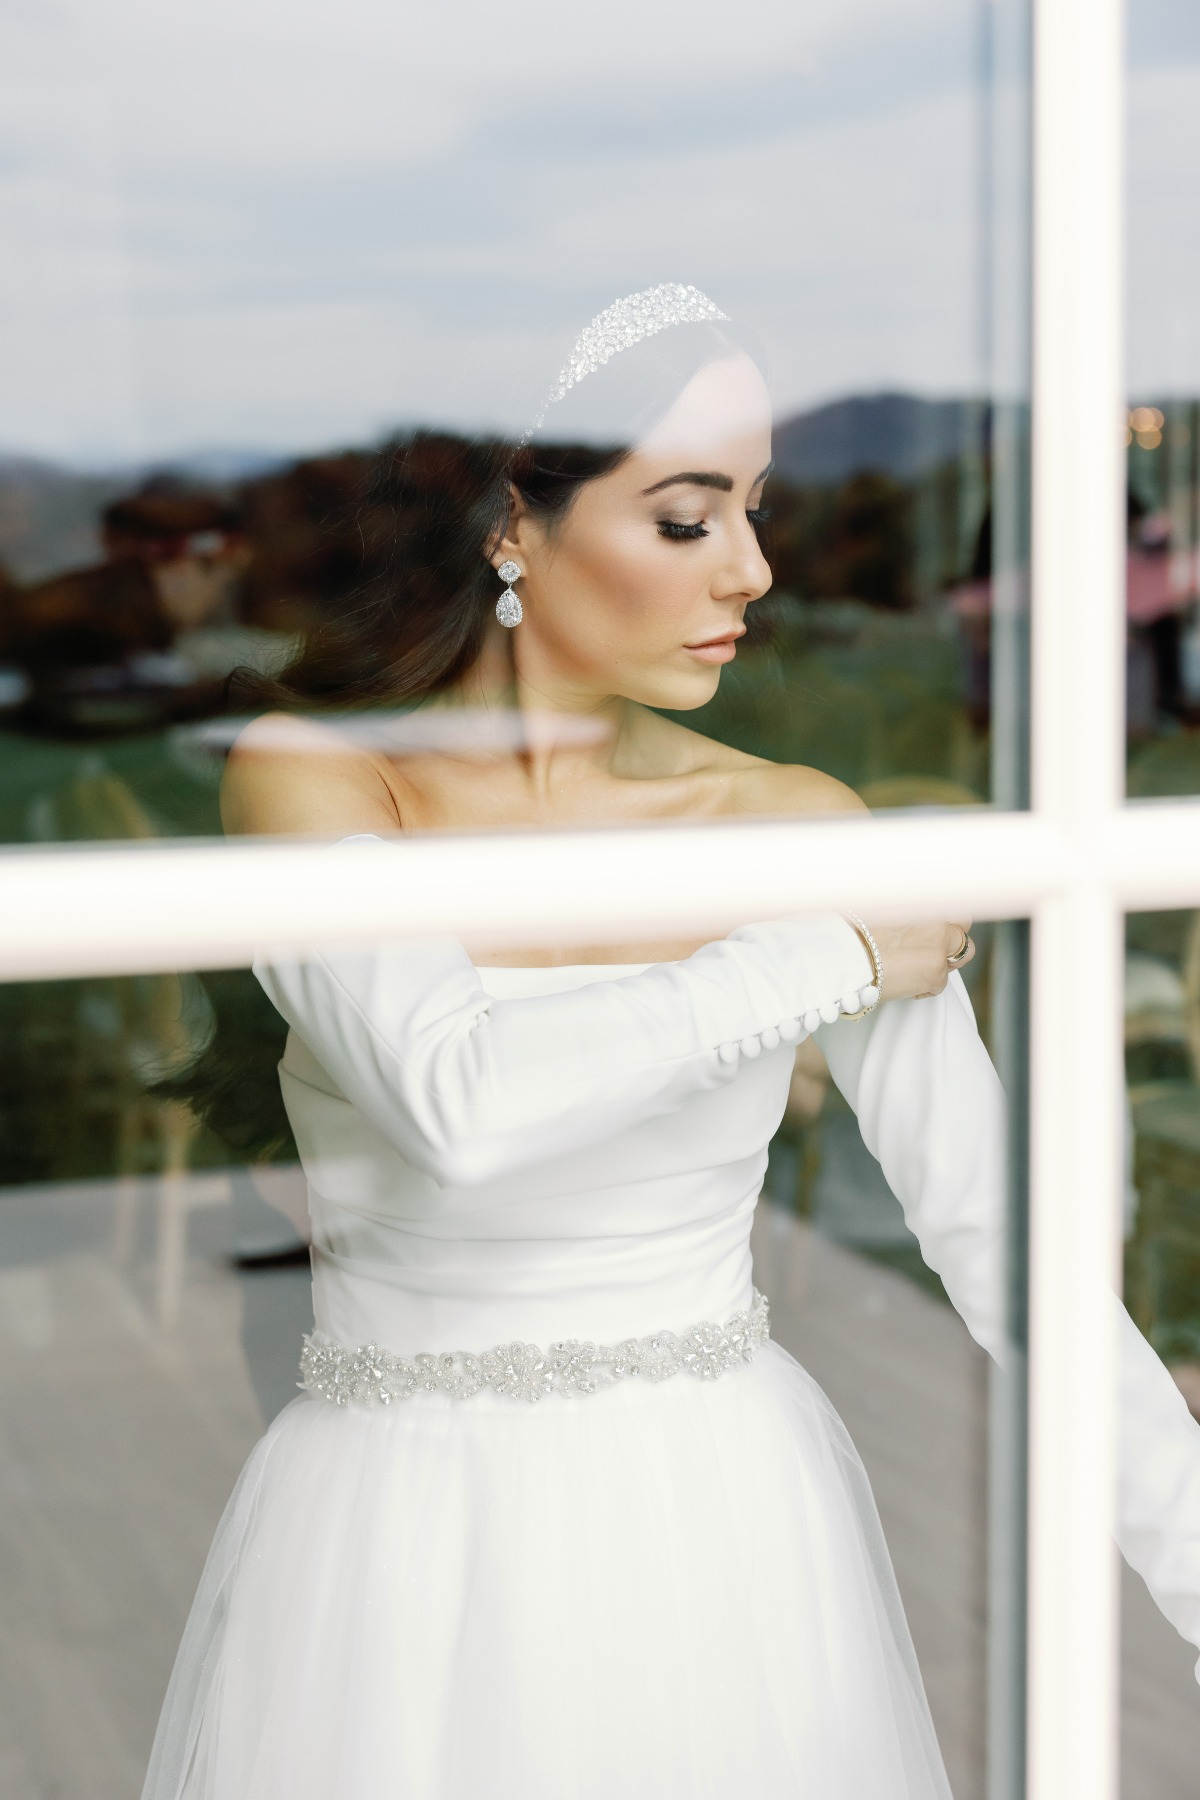 Glamorous bride putting on detached wedding dress sleeves